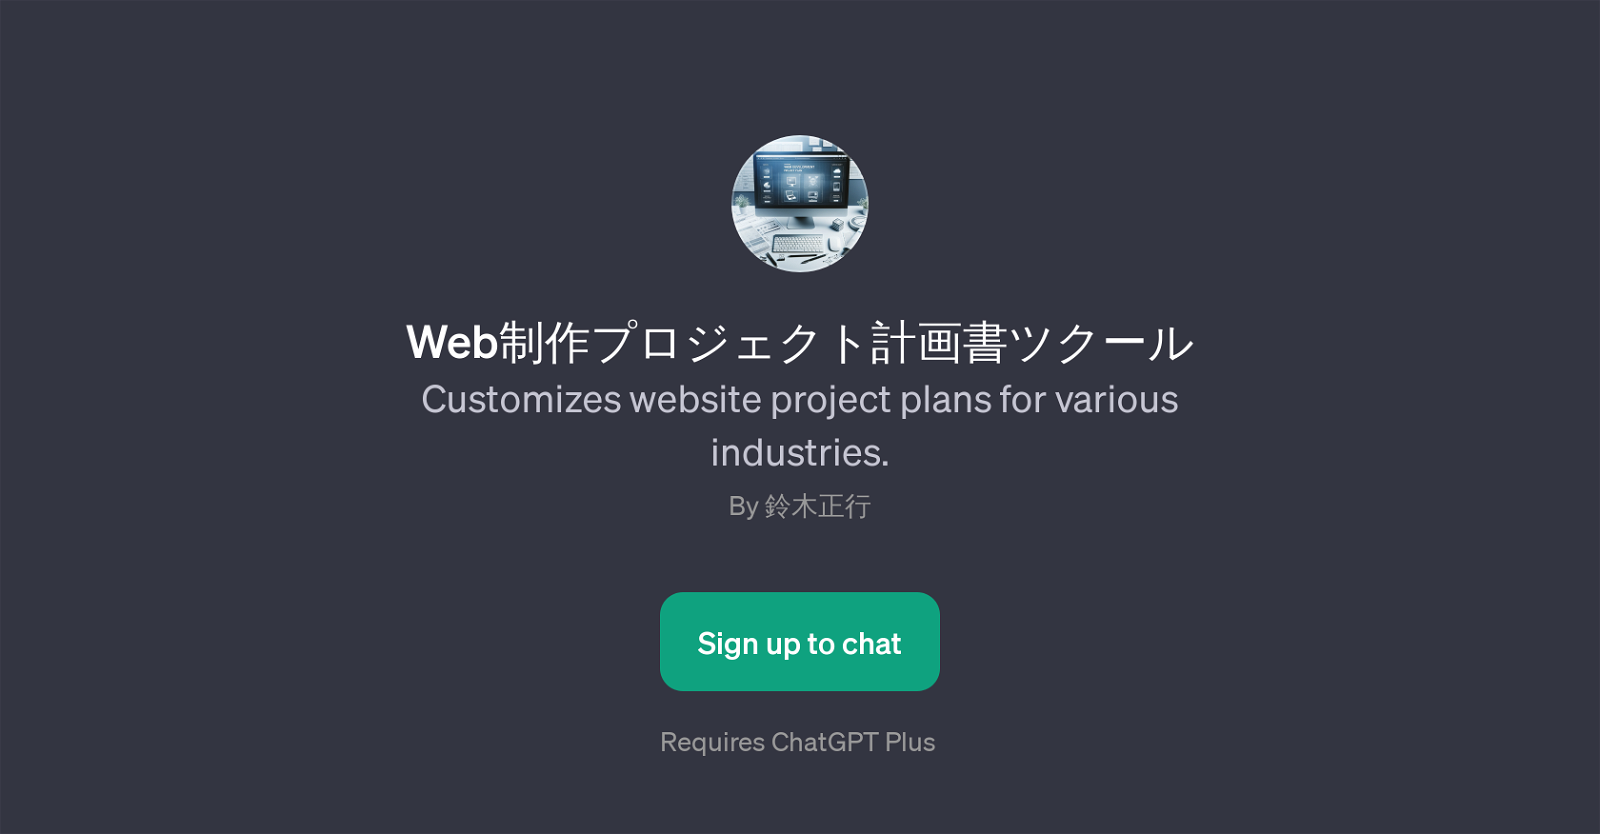 Web website